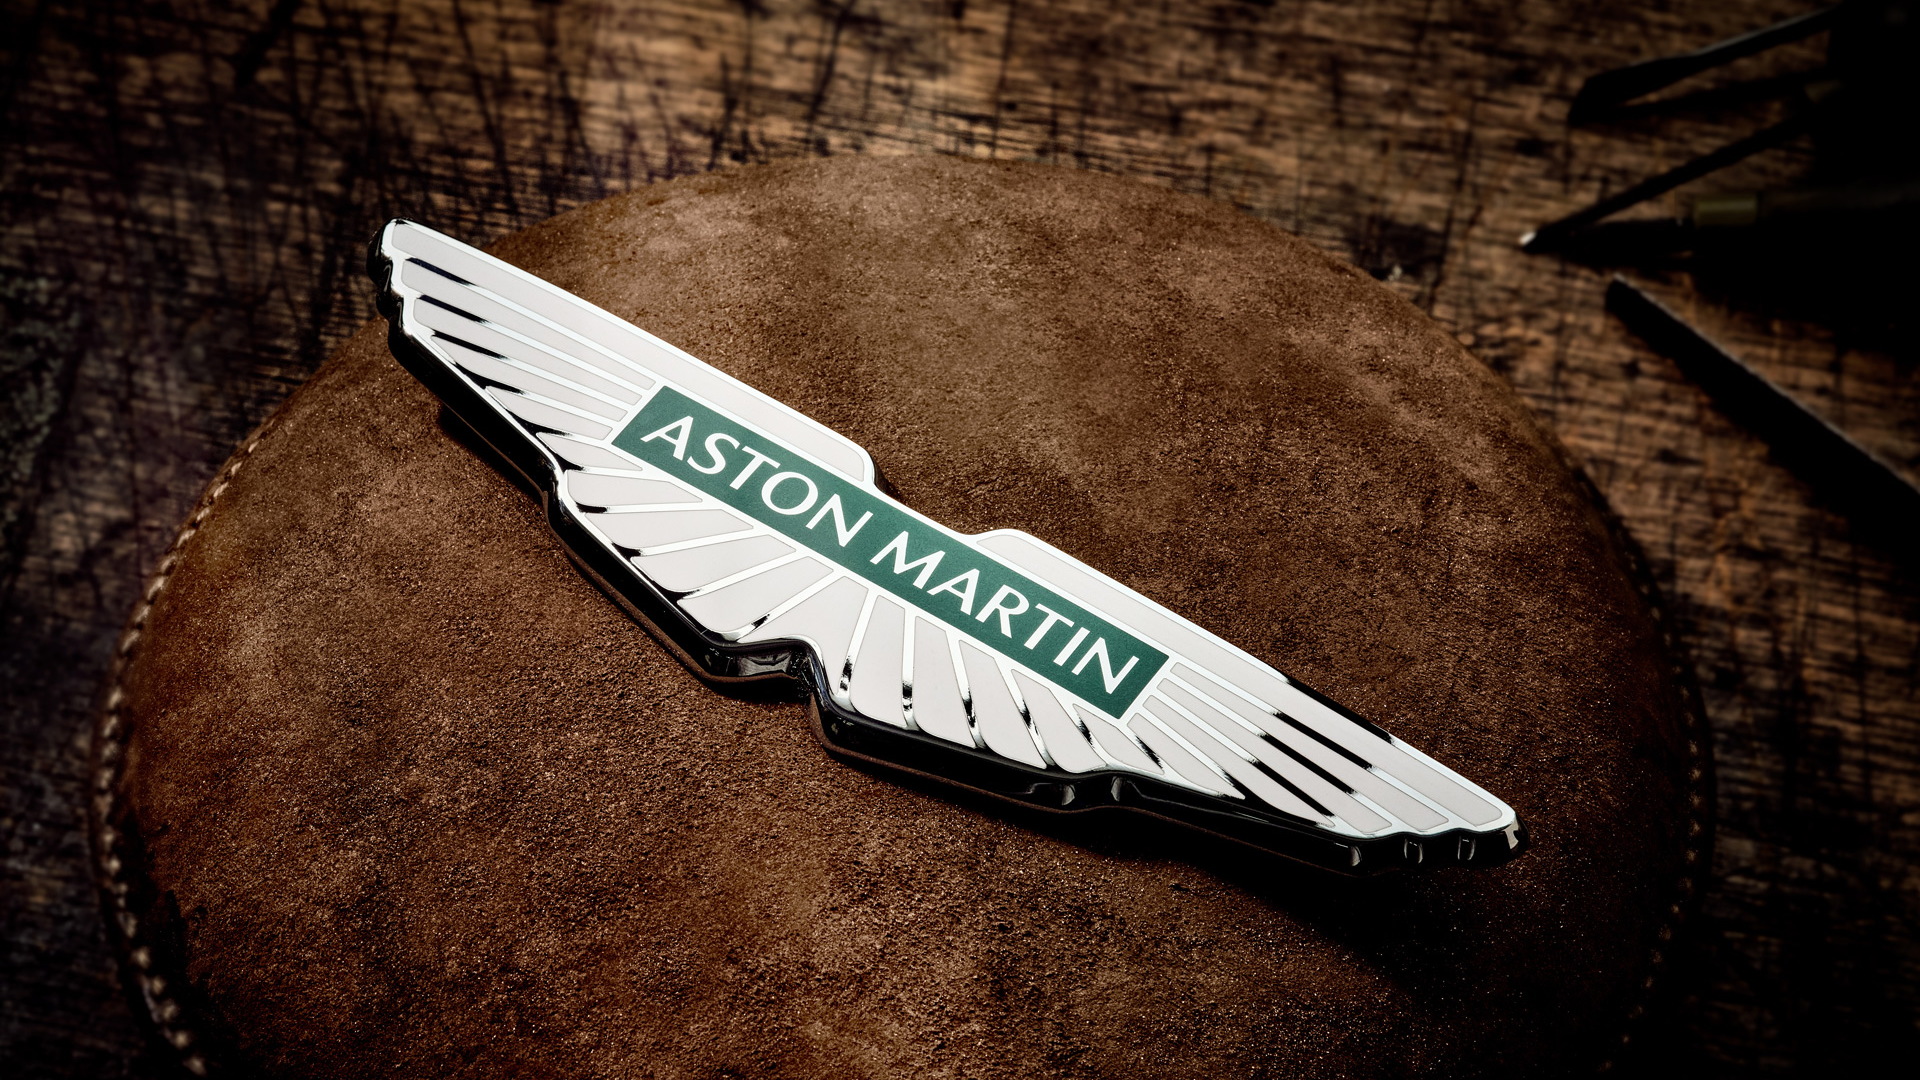 Aston Martin revises winged logo